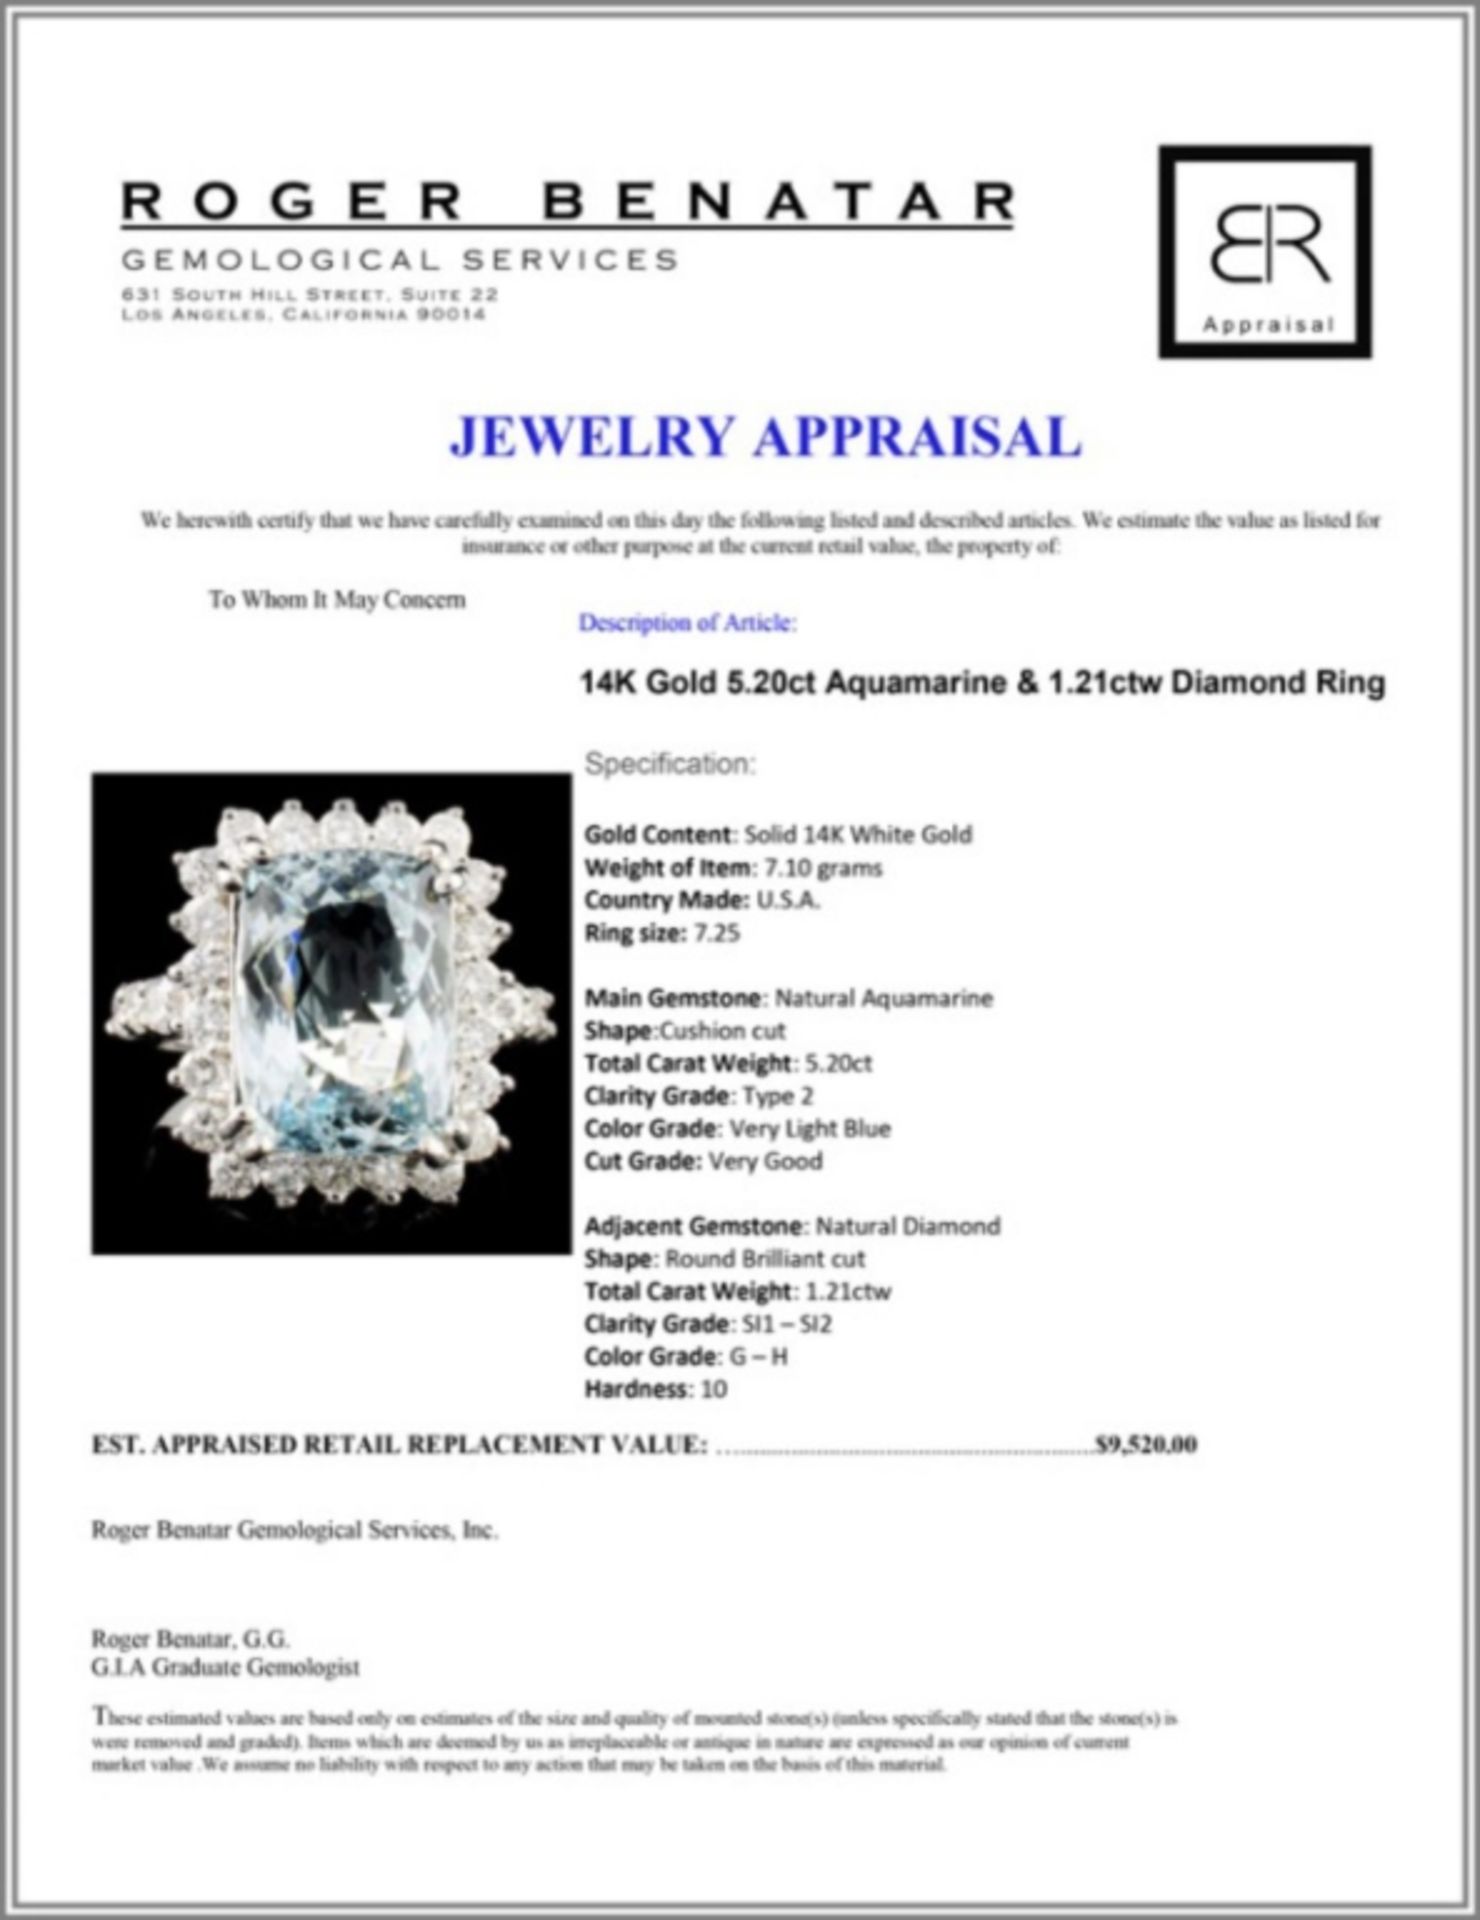 14K Gold 5.20ct Aquamarine & 1.21ctw Diamond Ring - Image 4 of 4